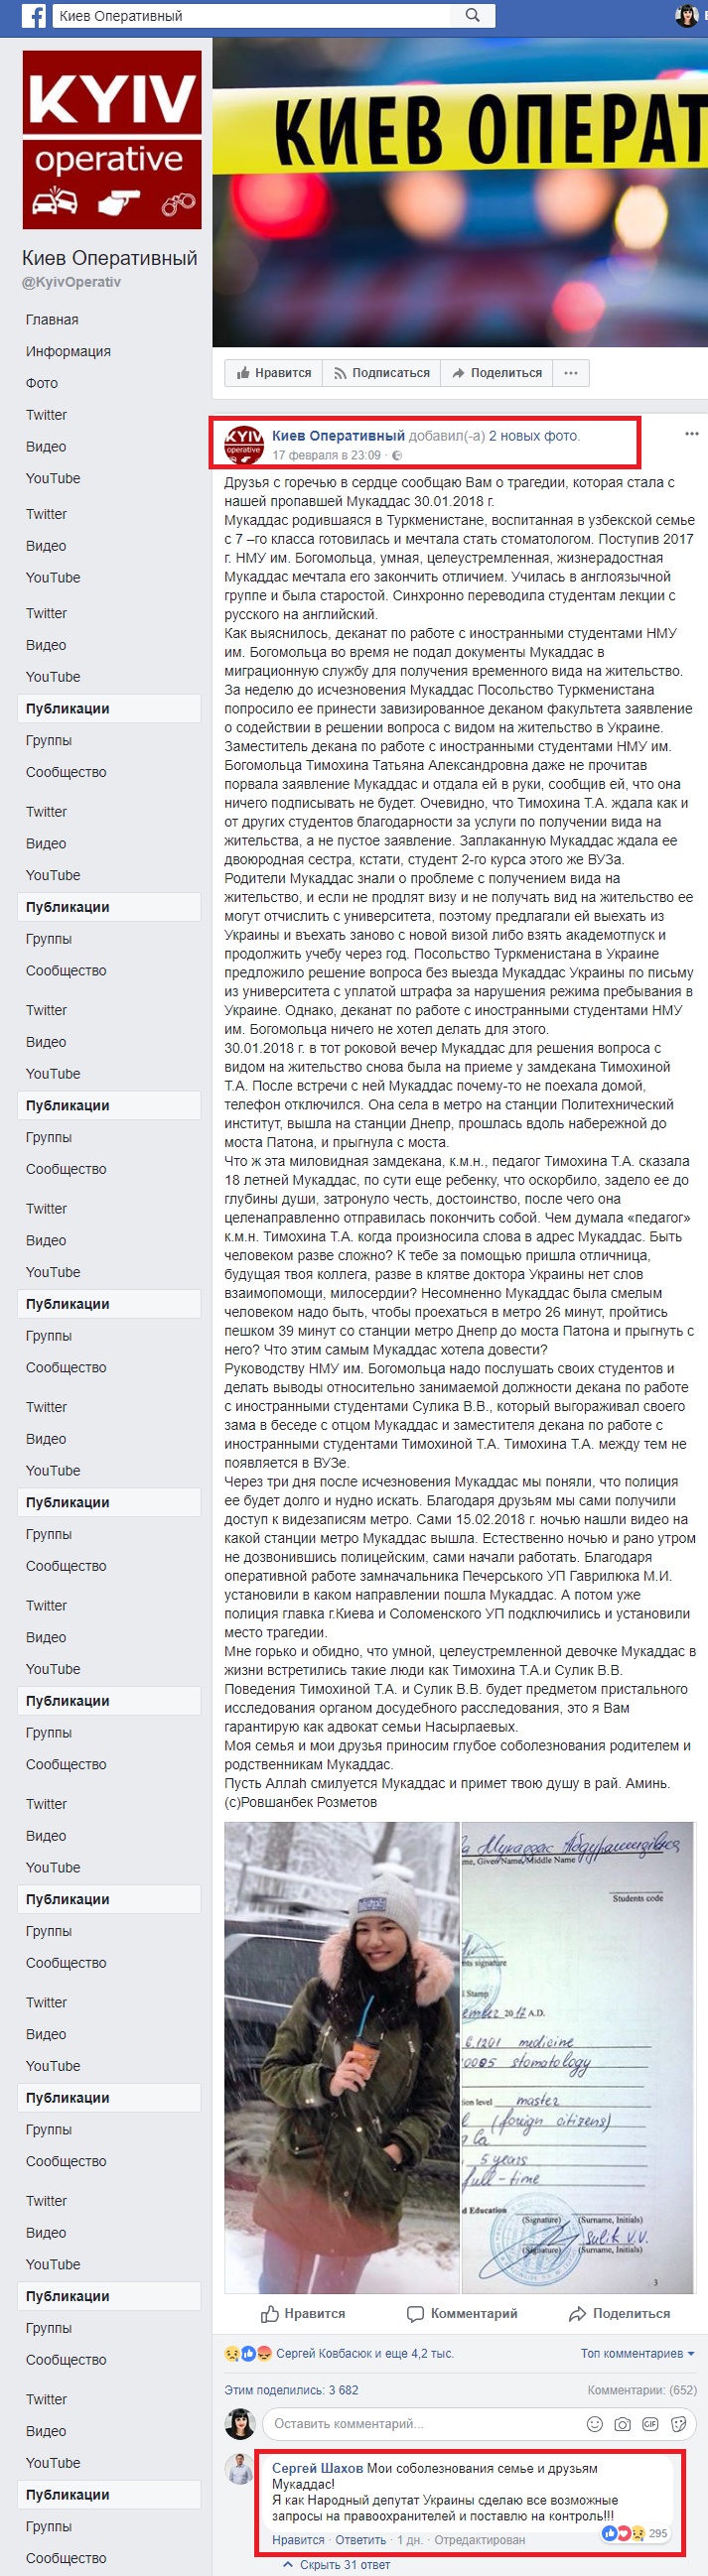 https://www.facebook.com/KyivOperativ/posts/464515277277897?comment_id=464748927254532&comment_tracking=%7B%22tn%22%3A%22R9%22%7D